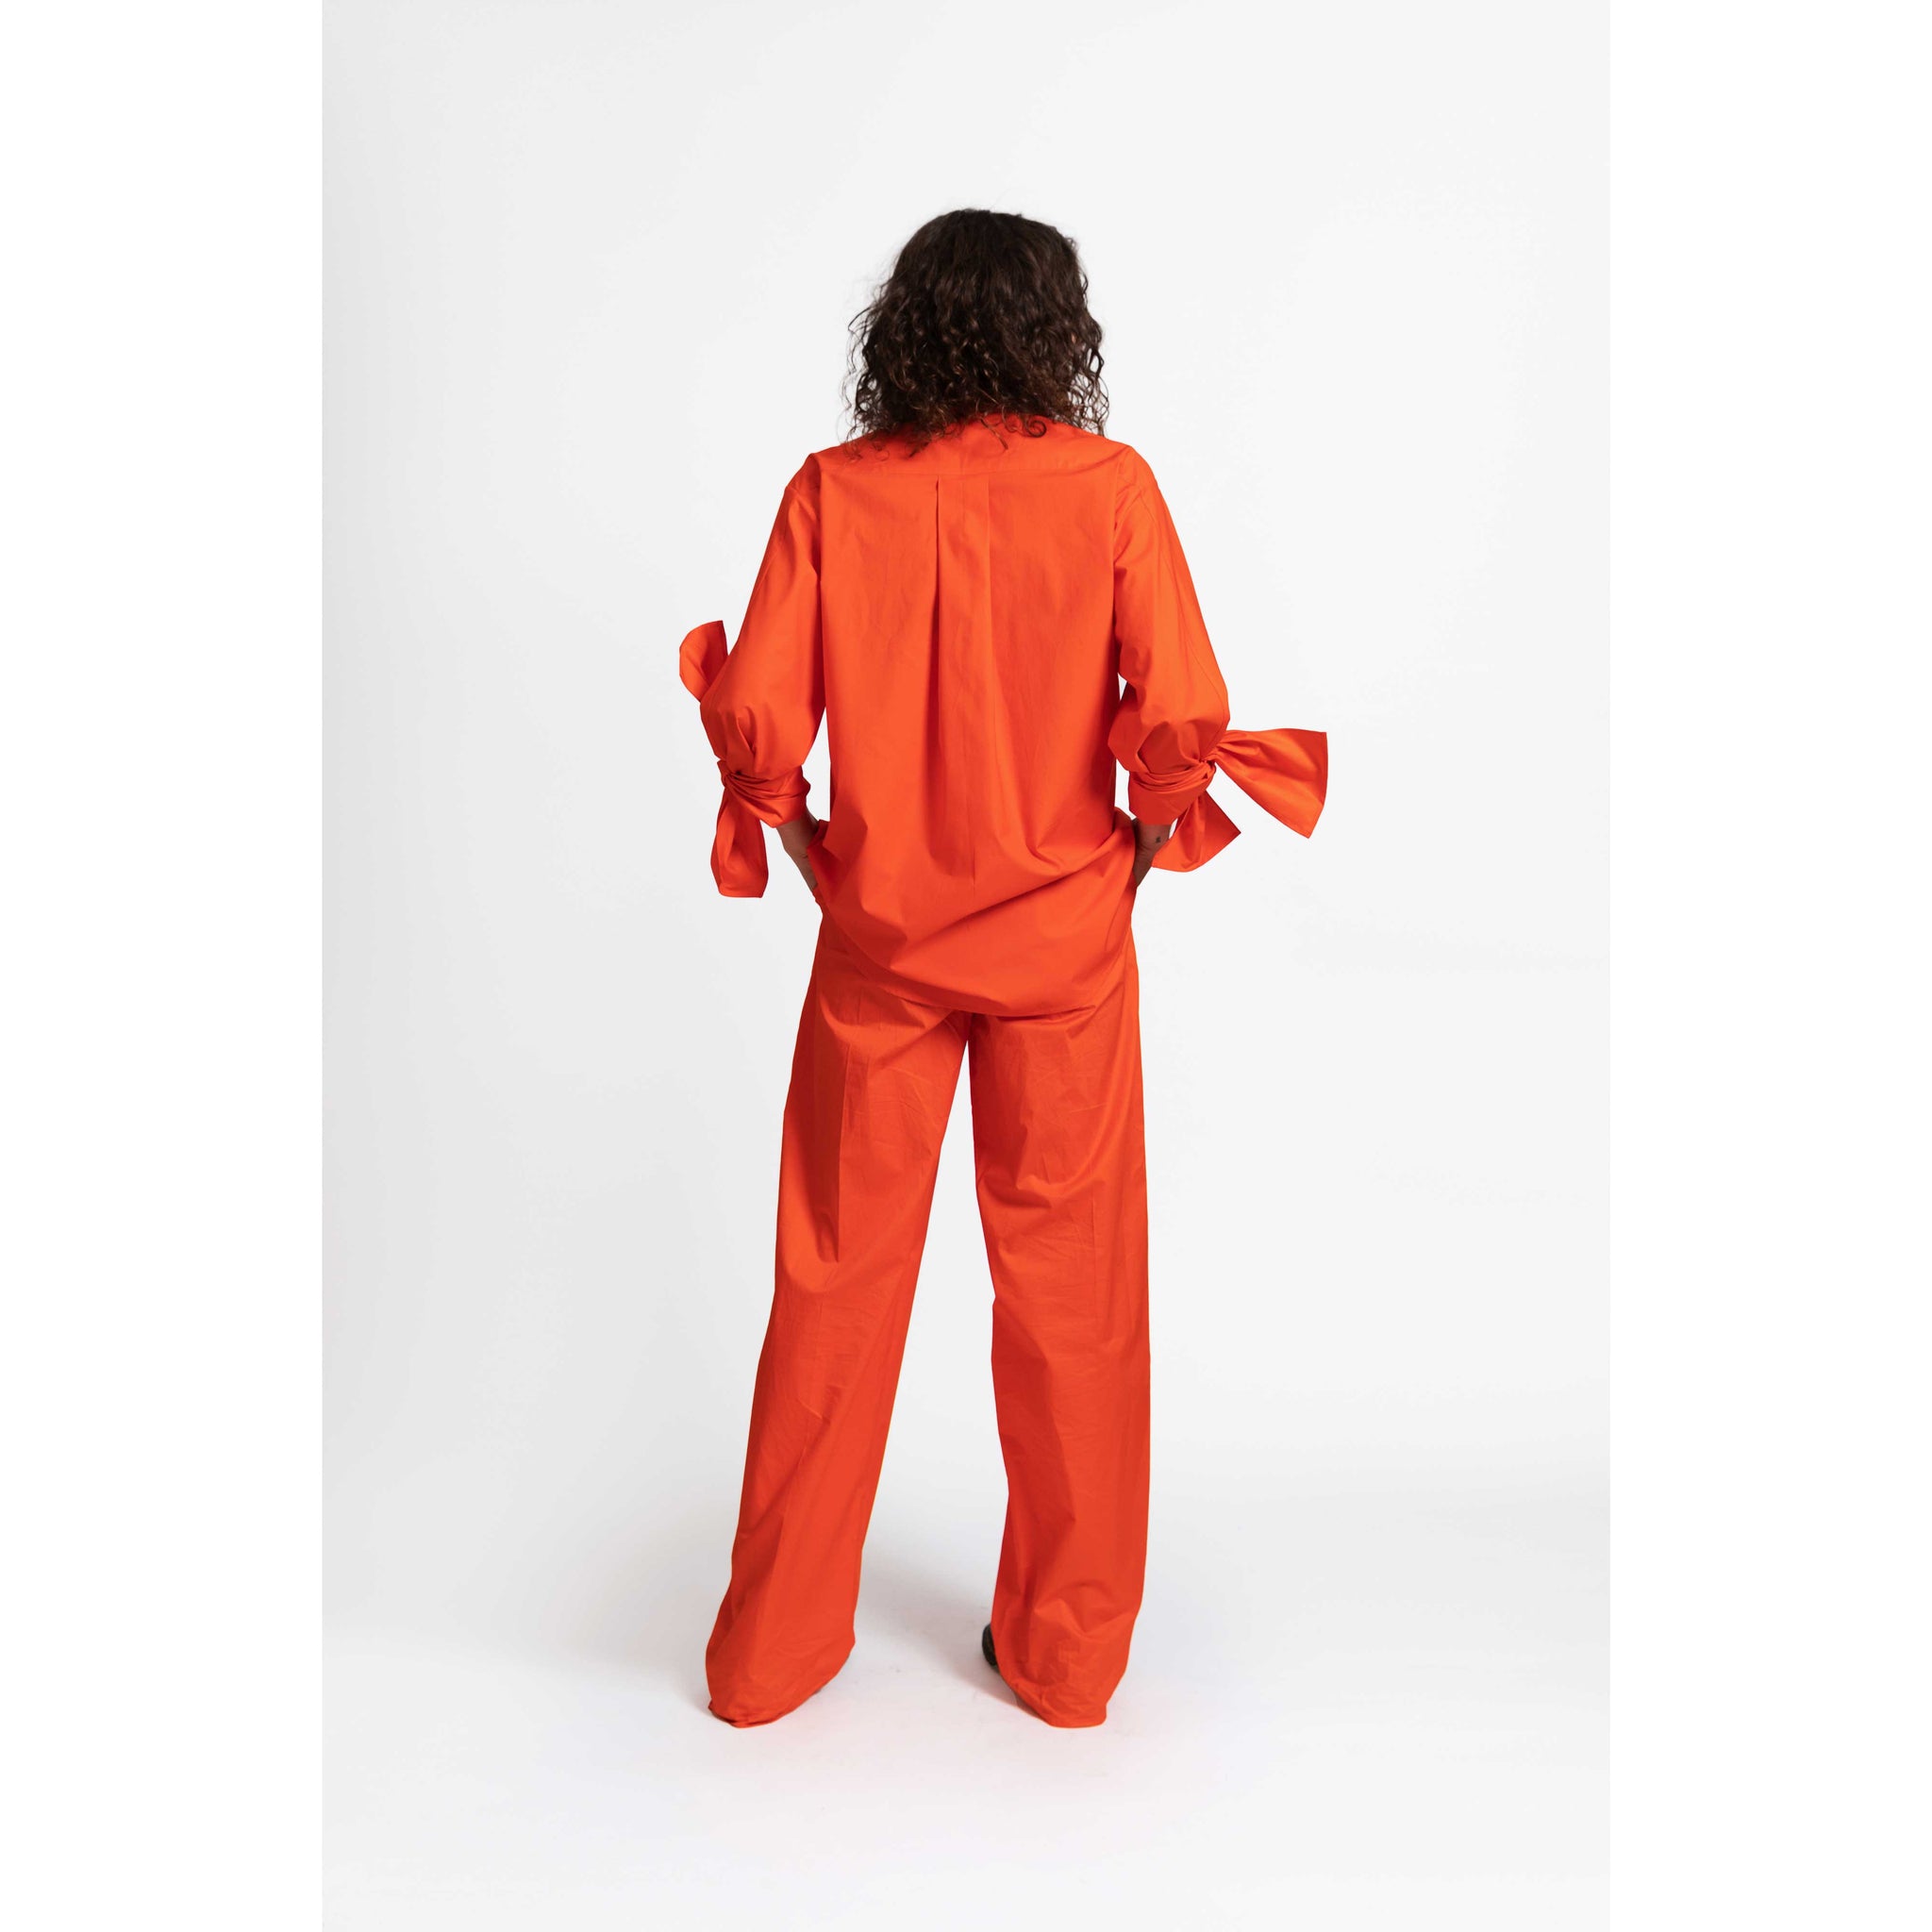 Track Suit Pants / phoenix orange